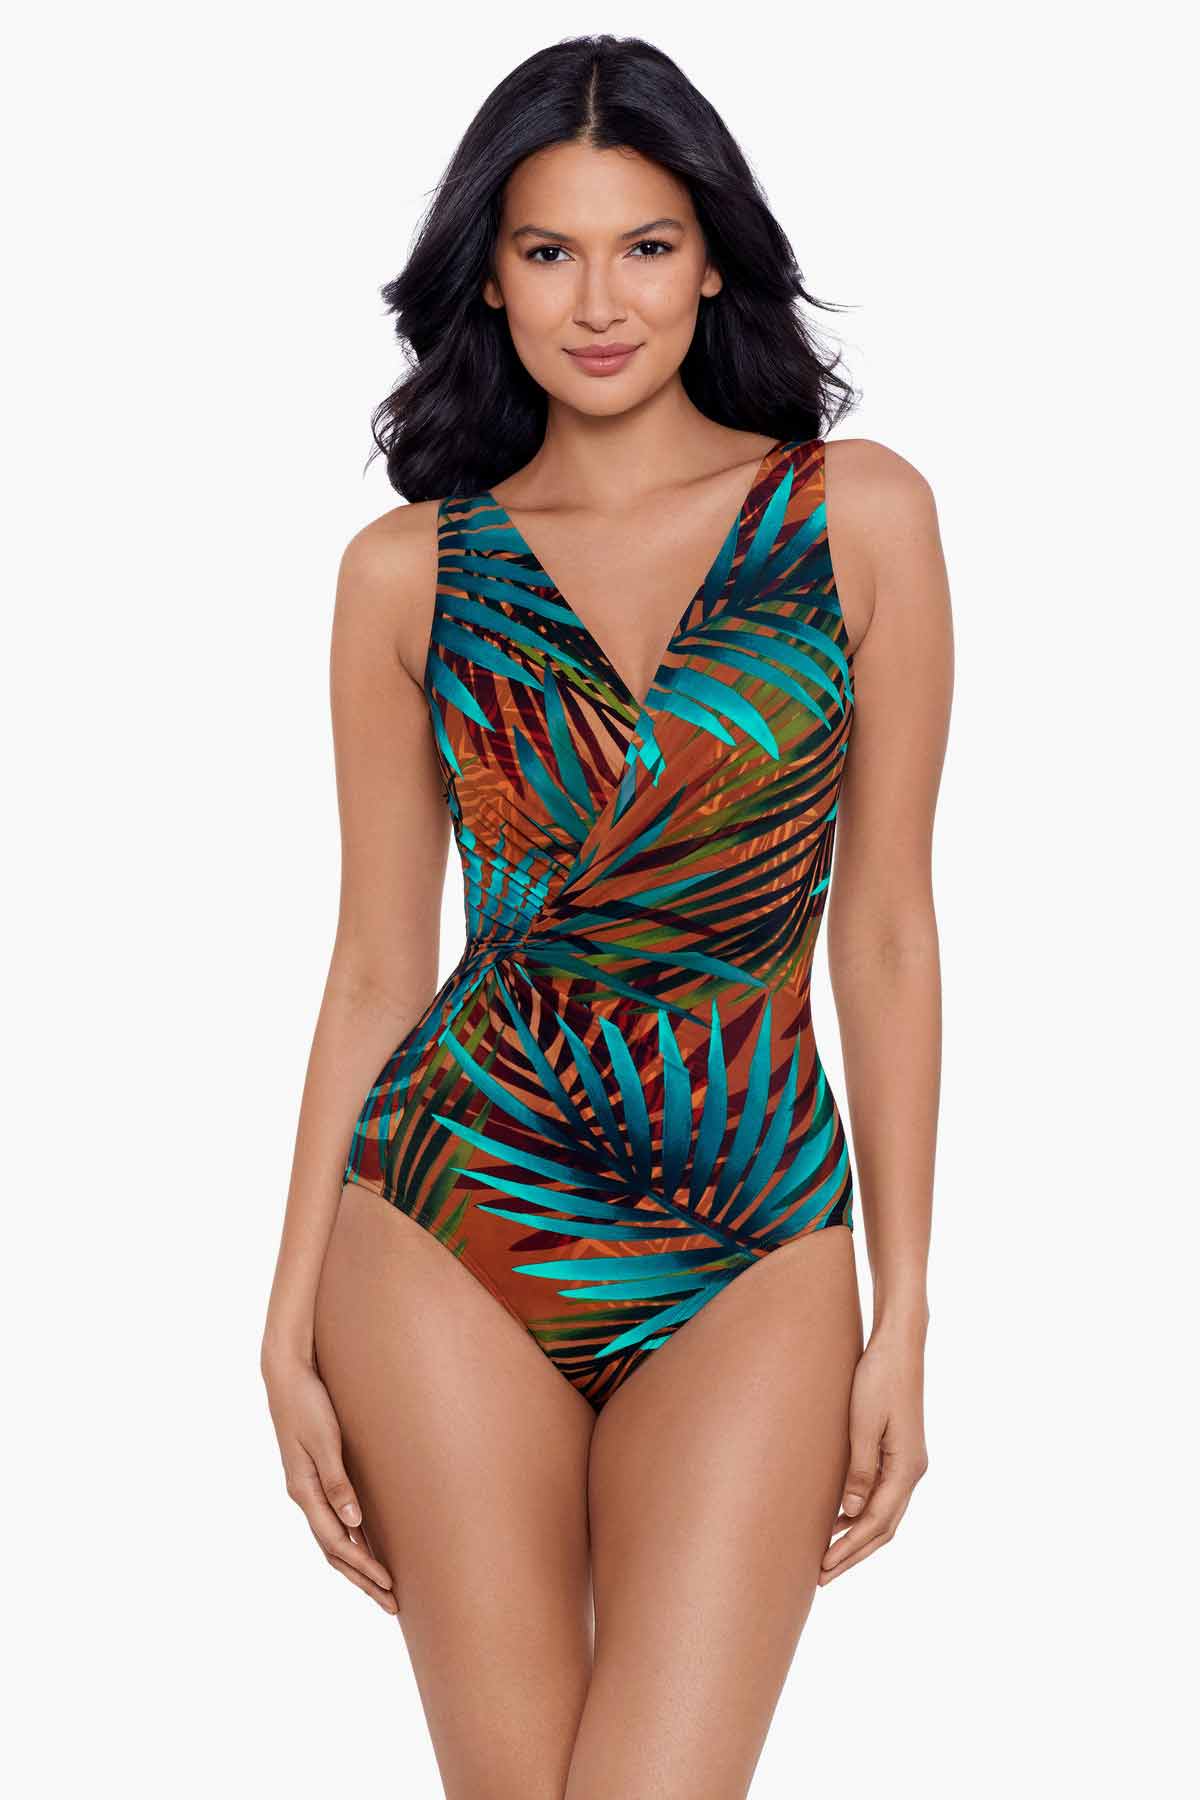 Wholesale women tiger bodysuit Trendy One-Piece Suits, Rompers